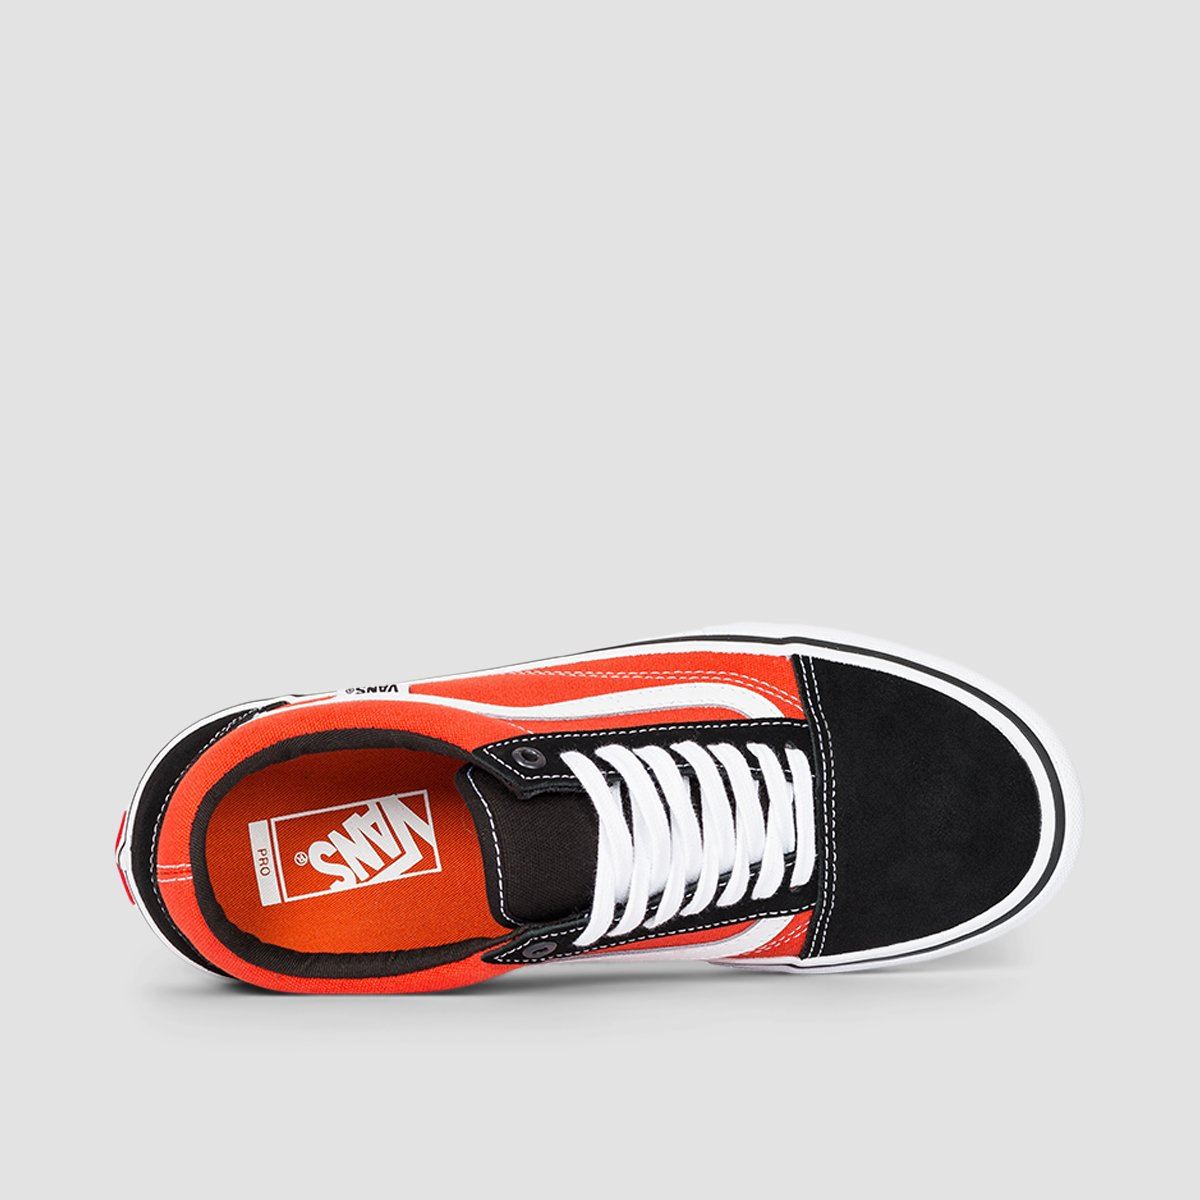 Vans Old Skool Pro Shoes - Black/Orange